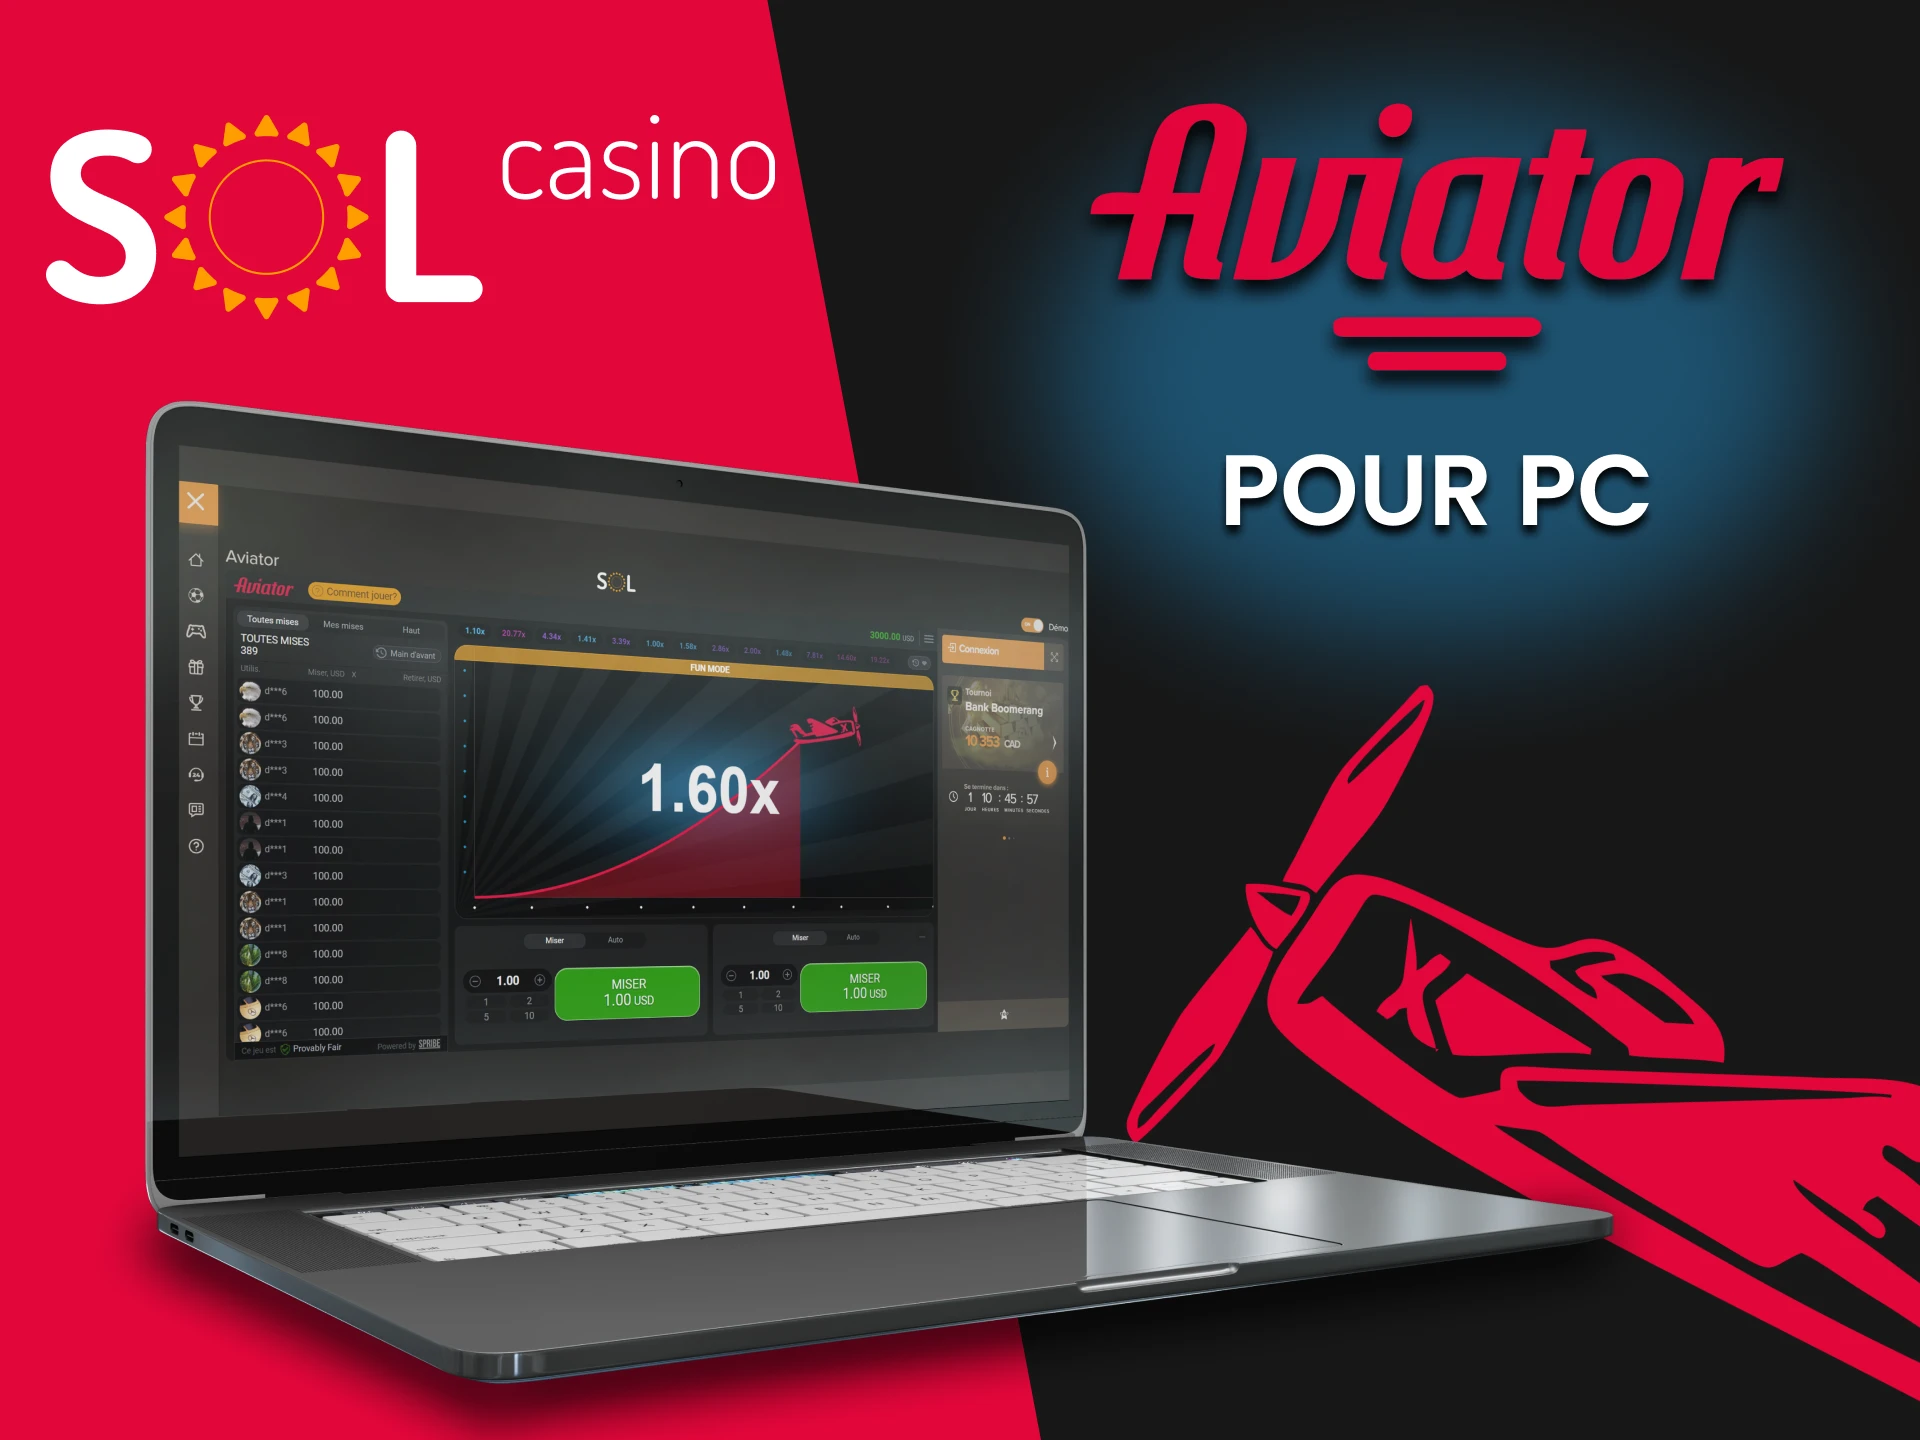 Essayez le jeu Aviator dans la version PC de Sol Casino.